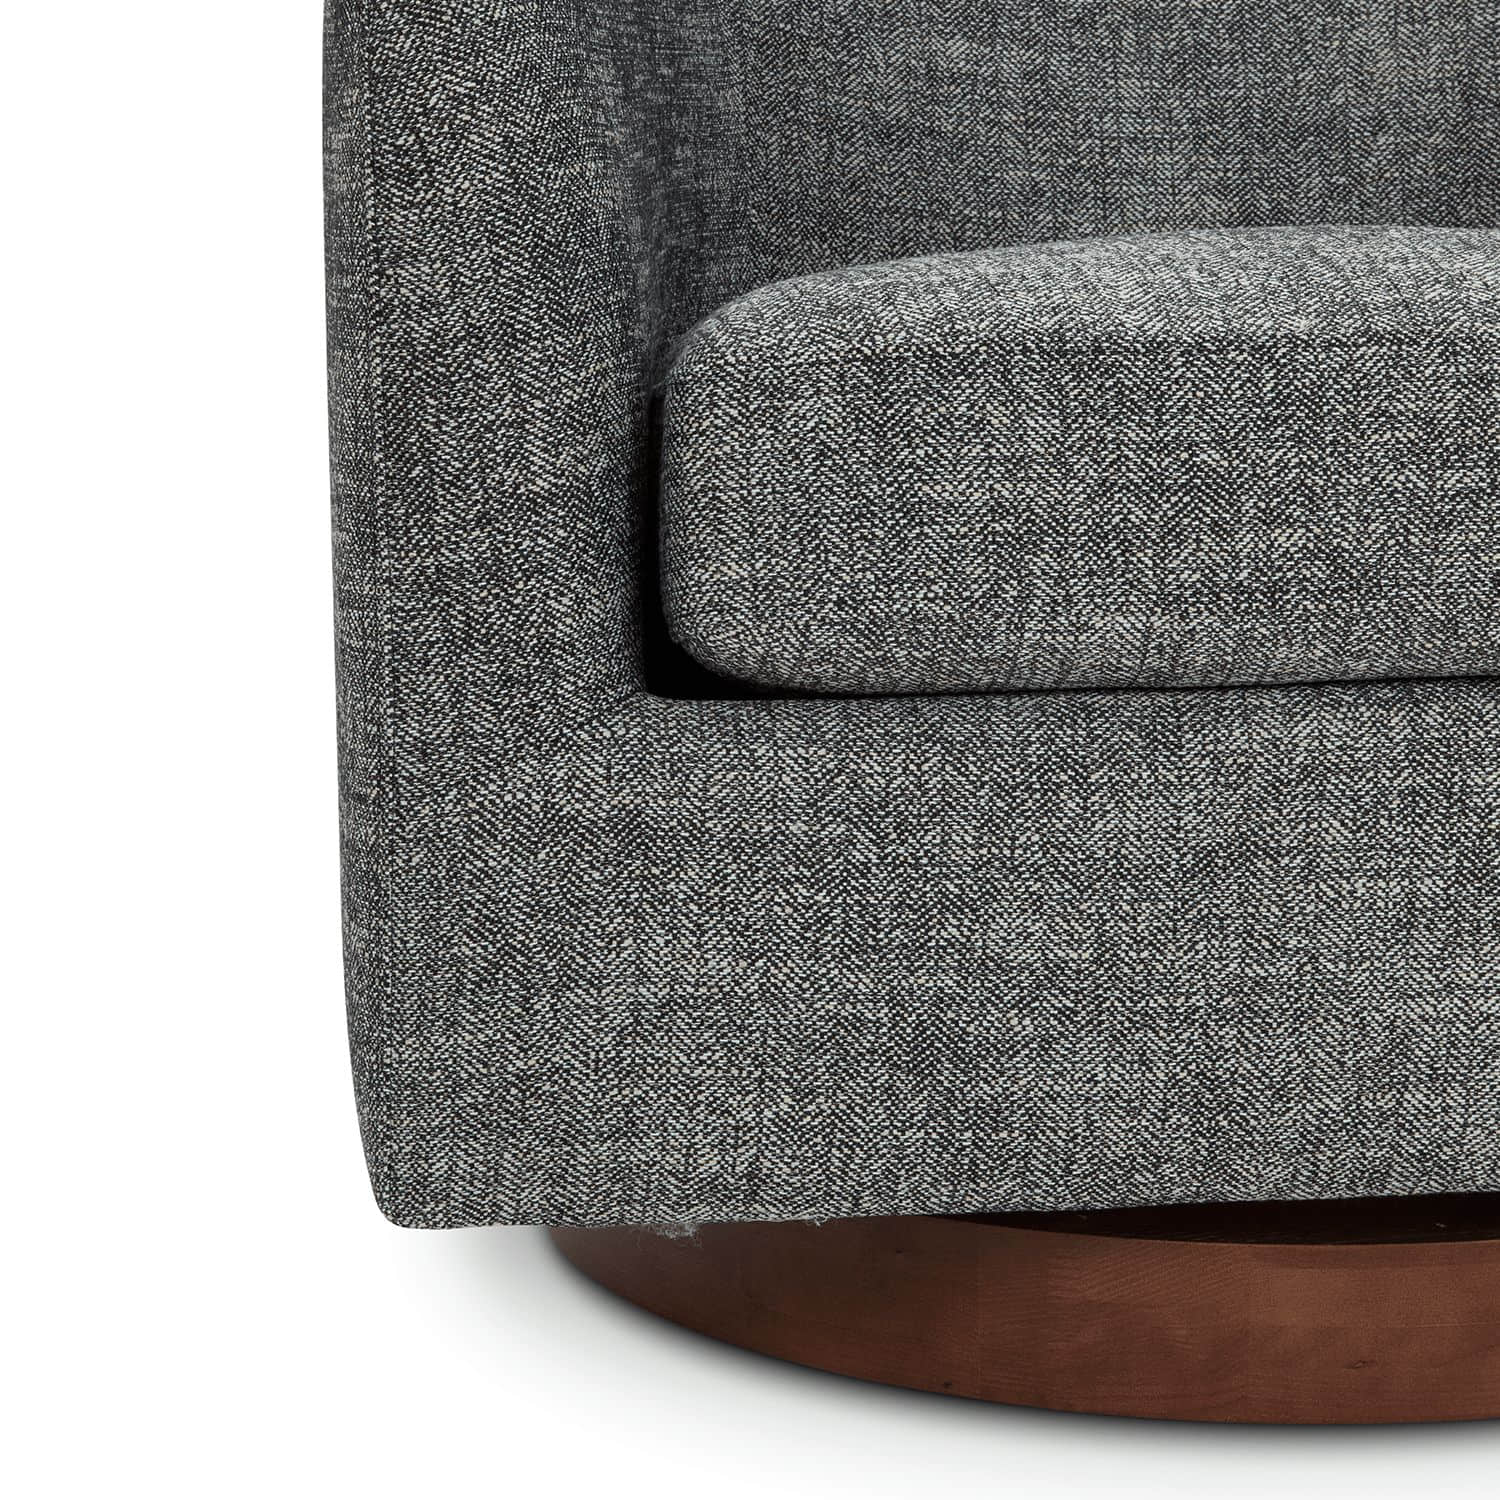 CHITA LIVING-Wren Modern Swivel Accent Chair-Accent Chair-Fabric-Dark Gray-